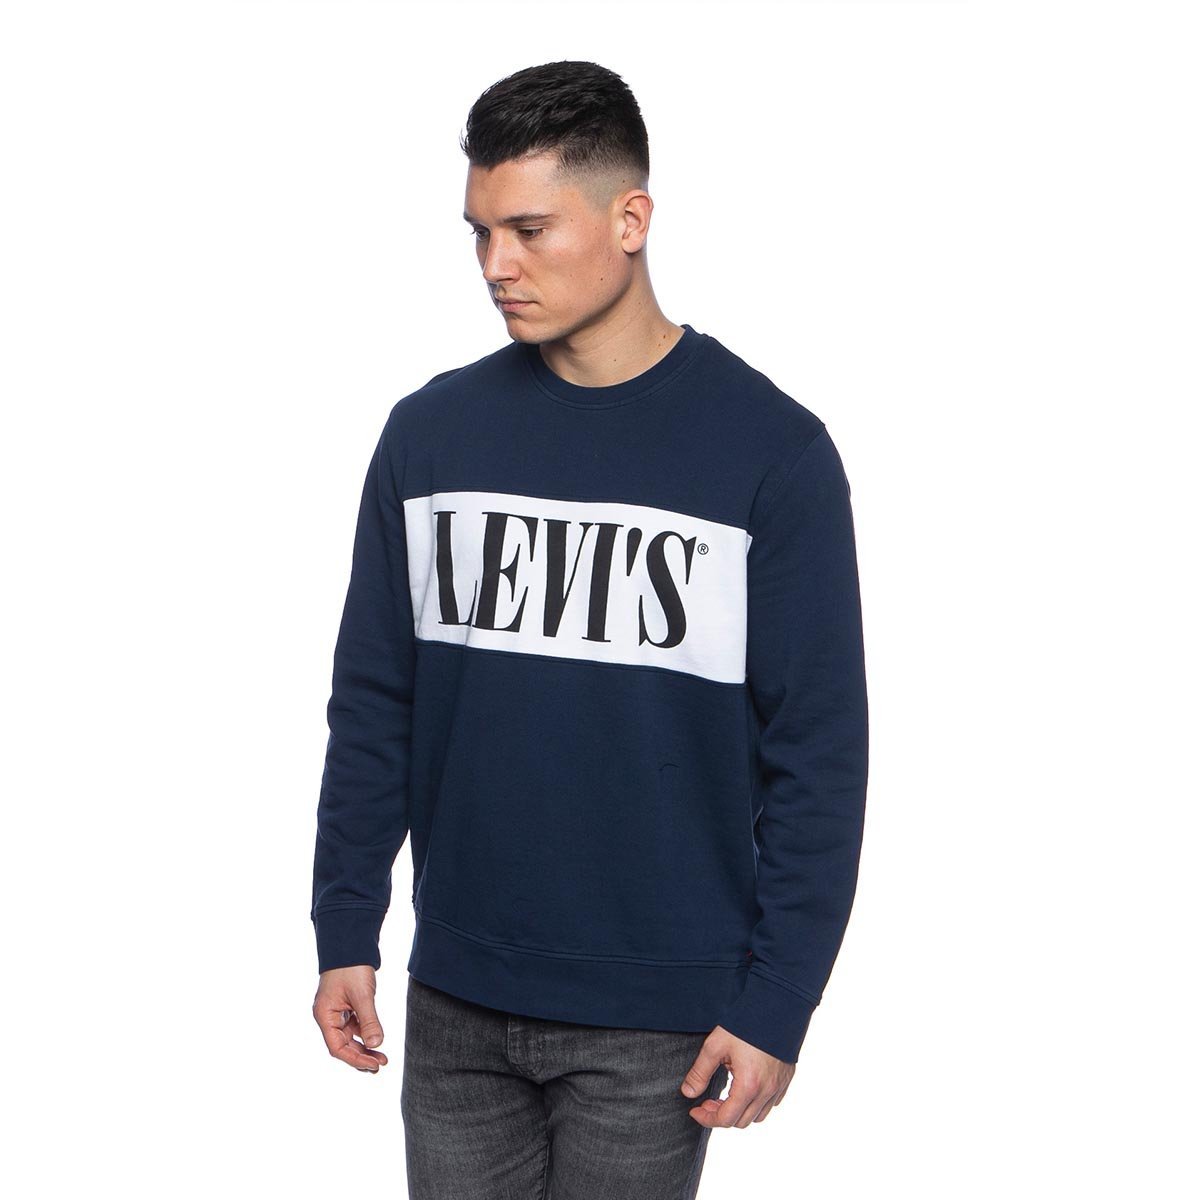 levi's navy sweatshirt